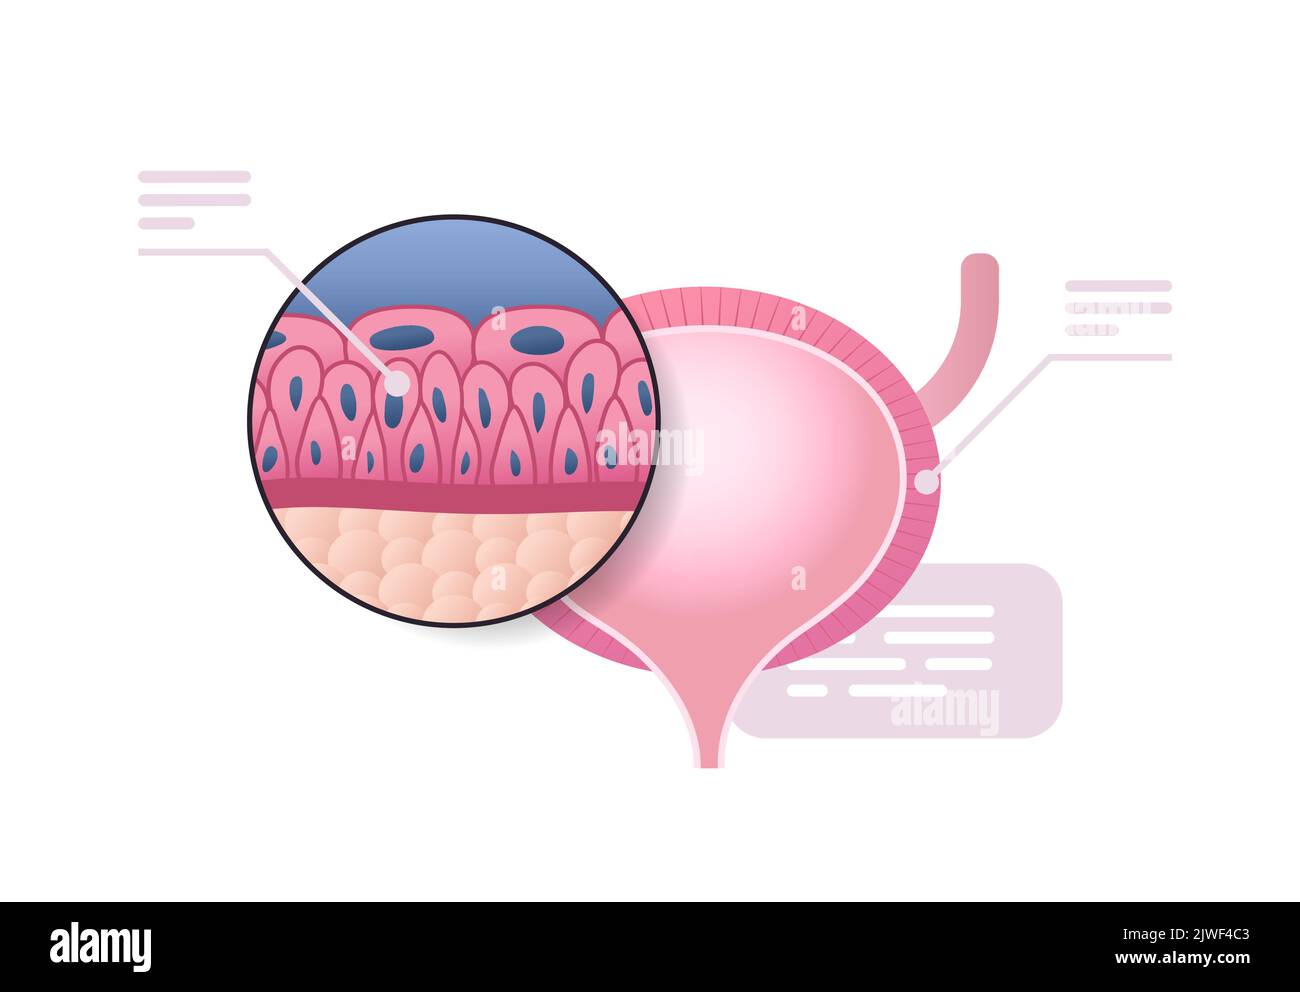 detailed explanation urinary bladder structure human internal organ anatomy healthcare medical concept horizontal Stock Vector